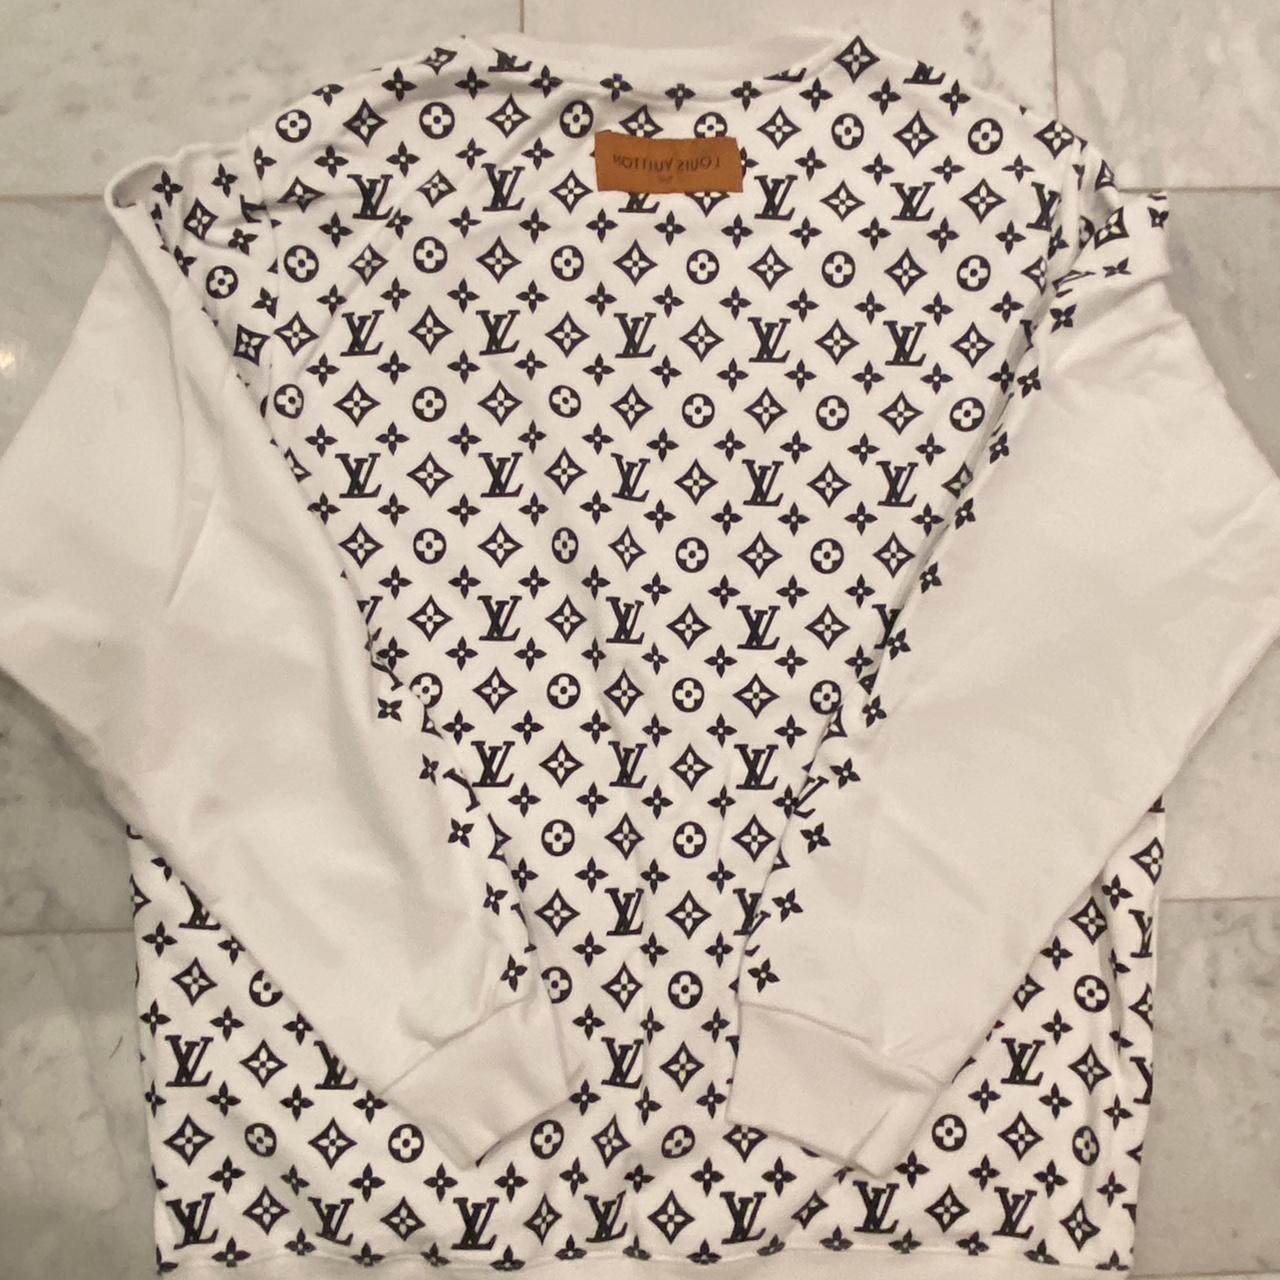 Louis Vuitton Sweater Size M 10/10 Condition Never - Depop